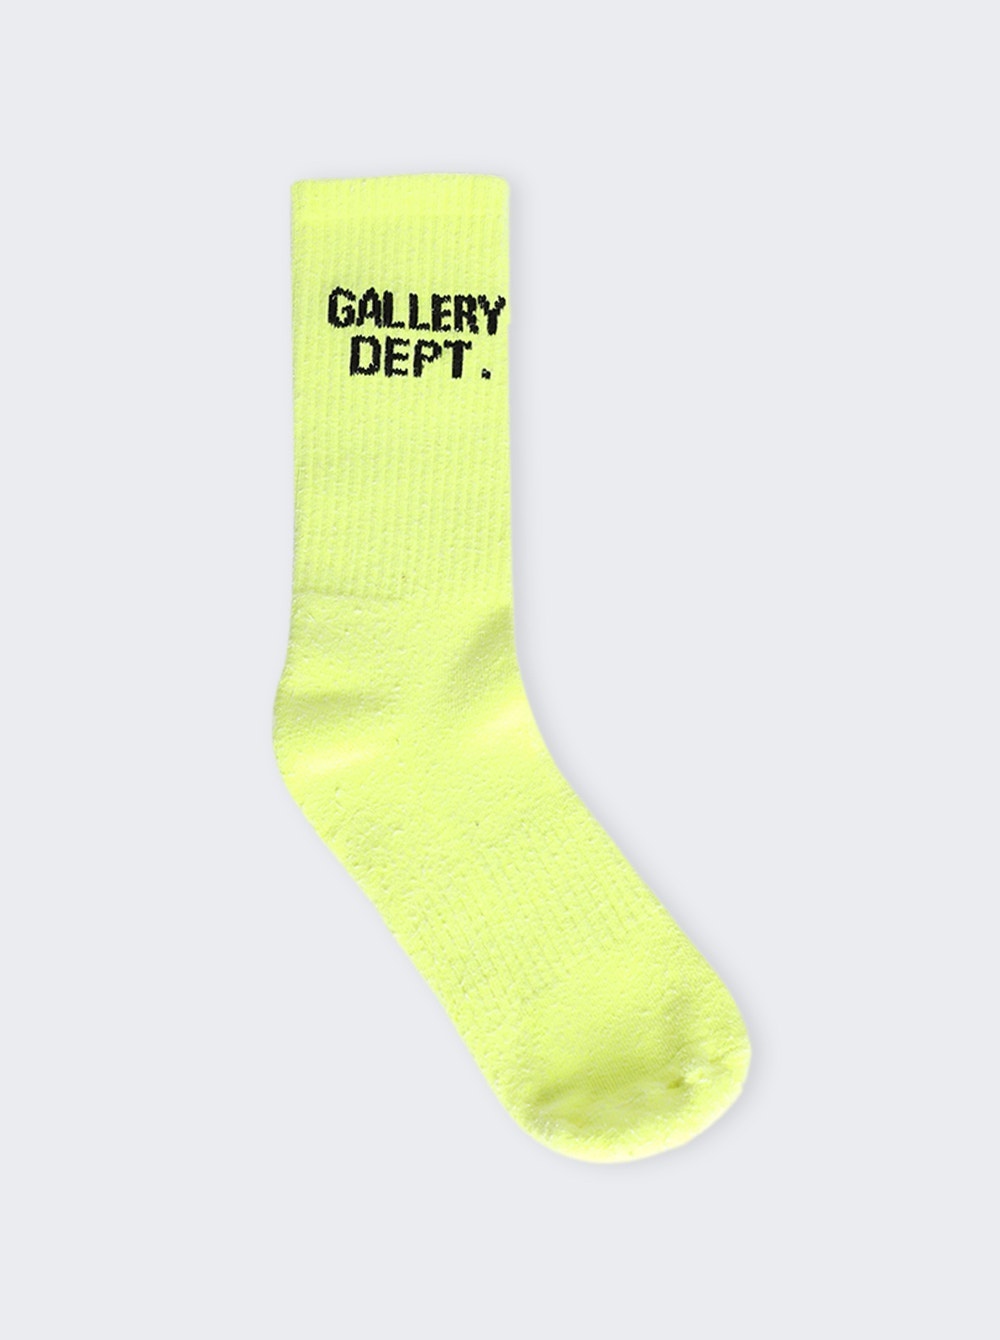 Clean Socks Fluorescent Yellow - 1